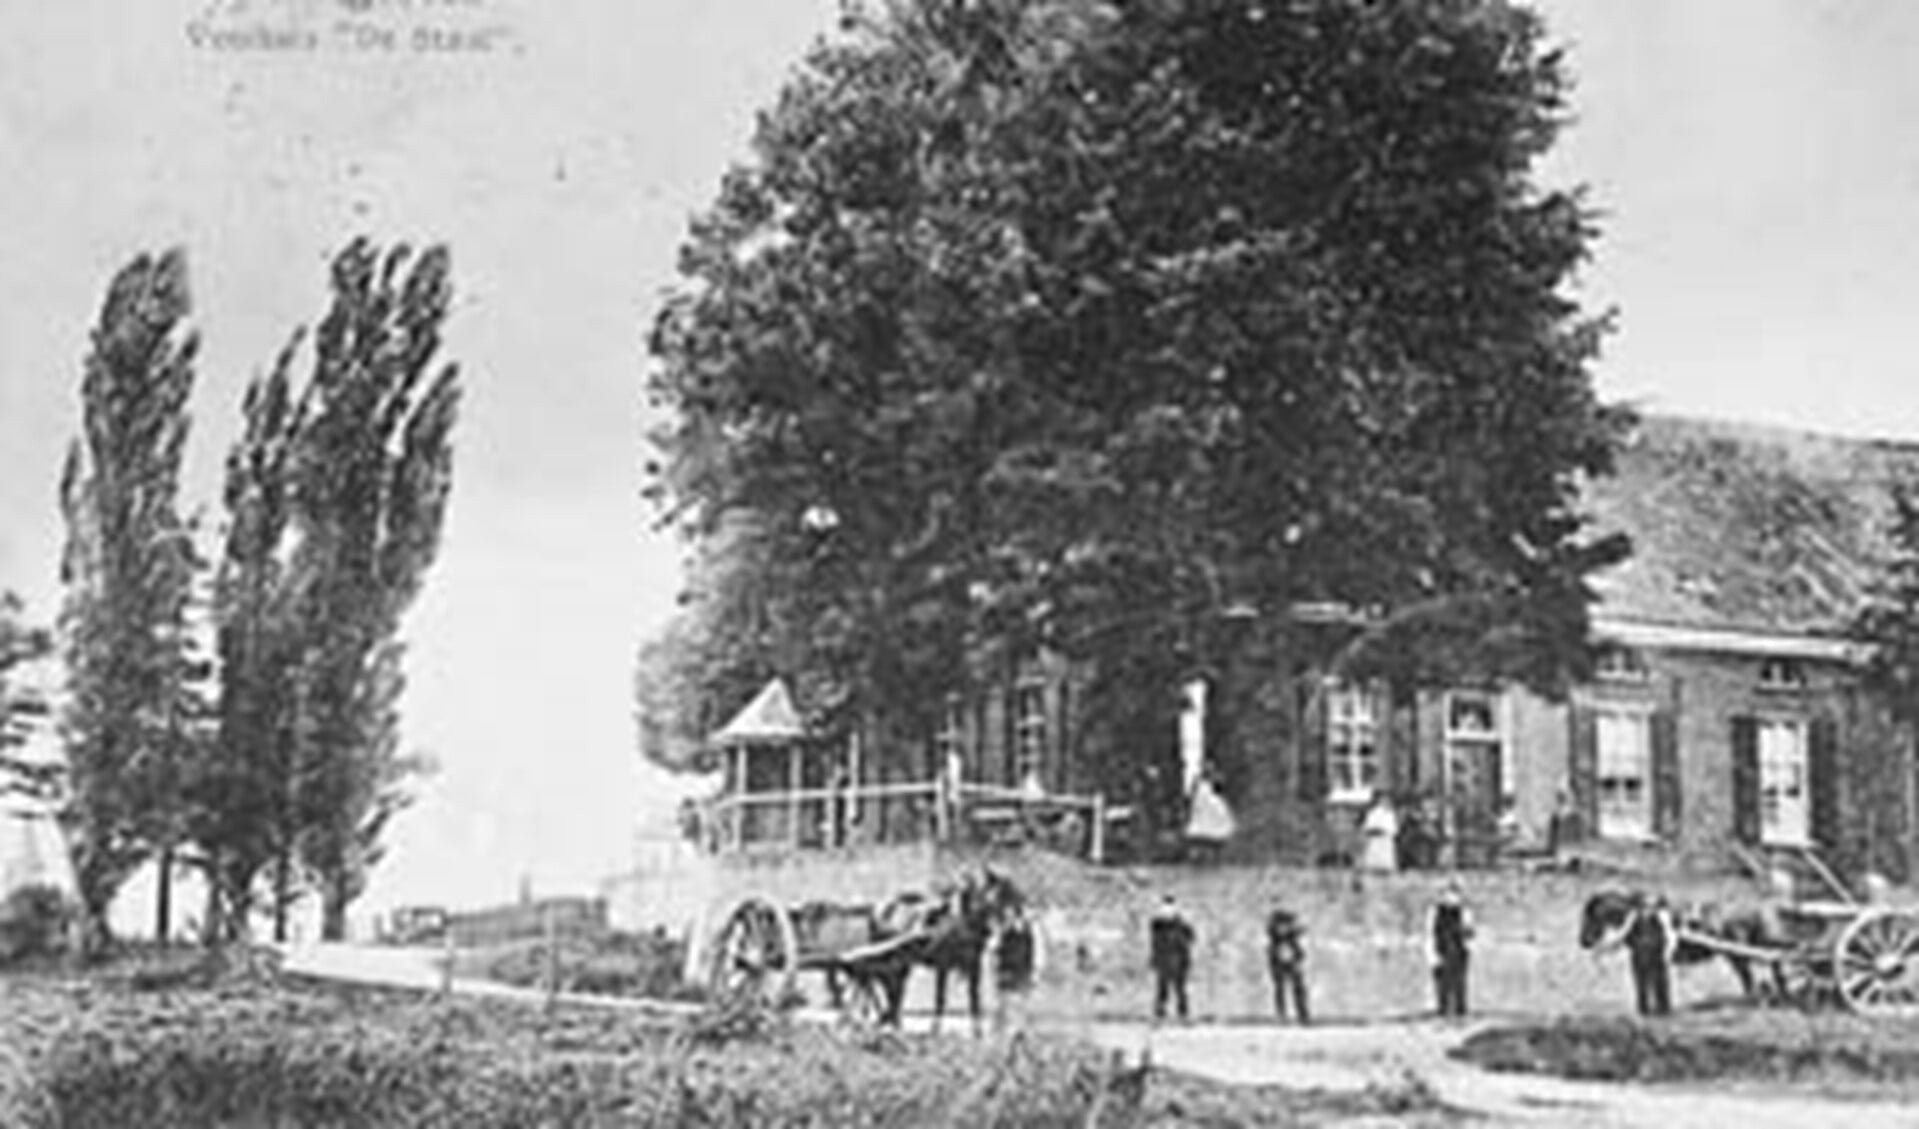  Veerhuis Staay anno 1900.  